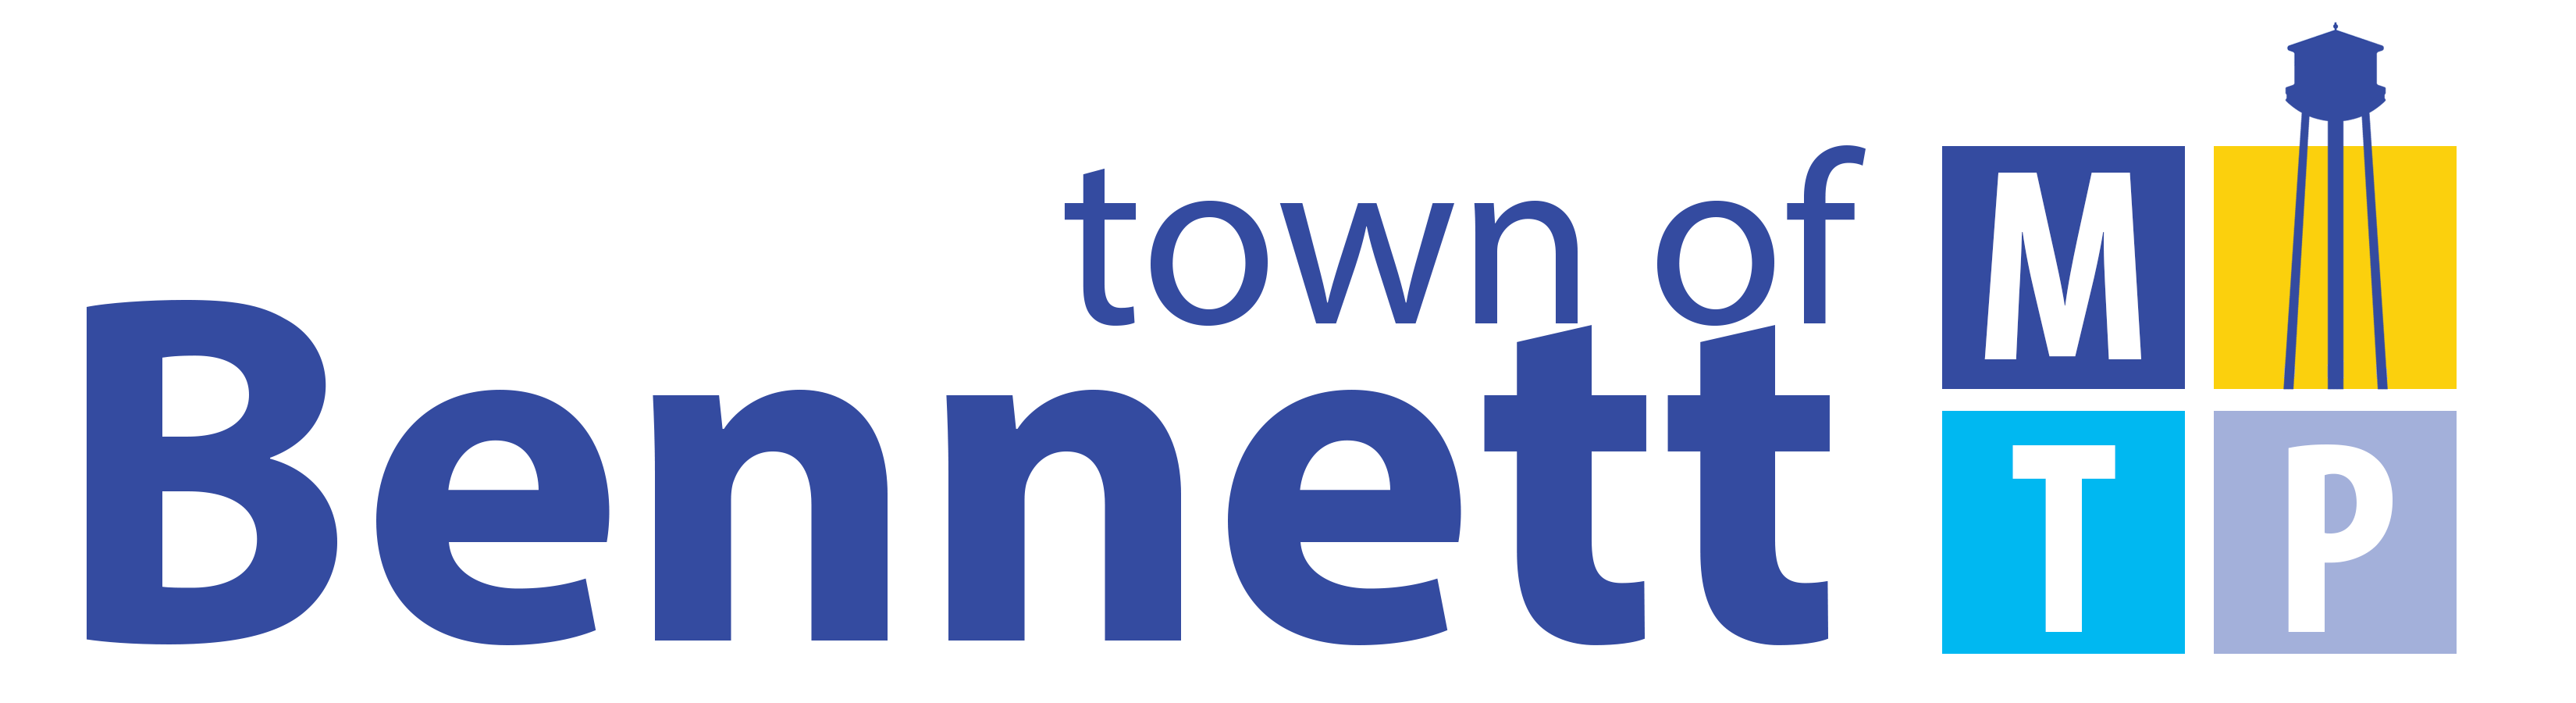 Town of Bennett Master Transportation Plan logo 